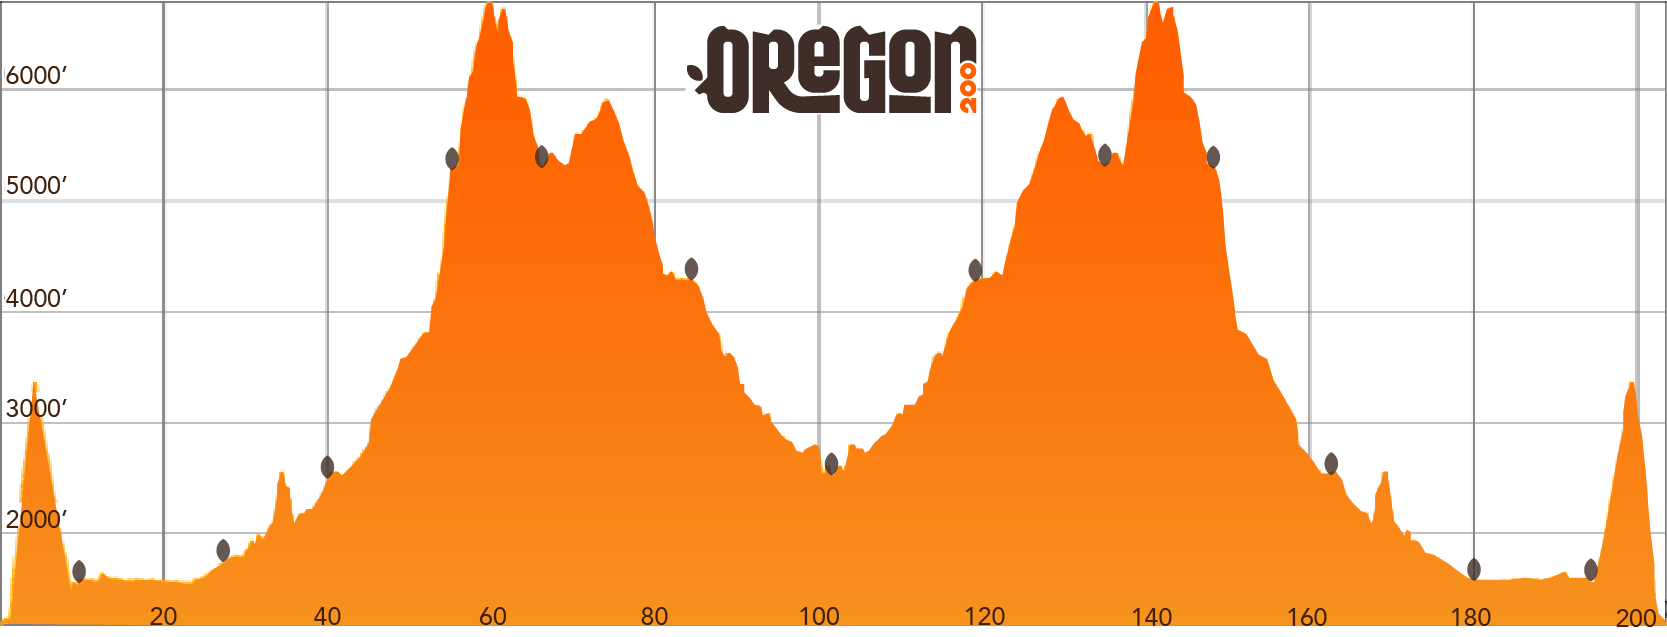 Oregon 200 elevation profile